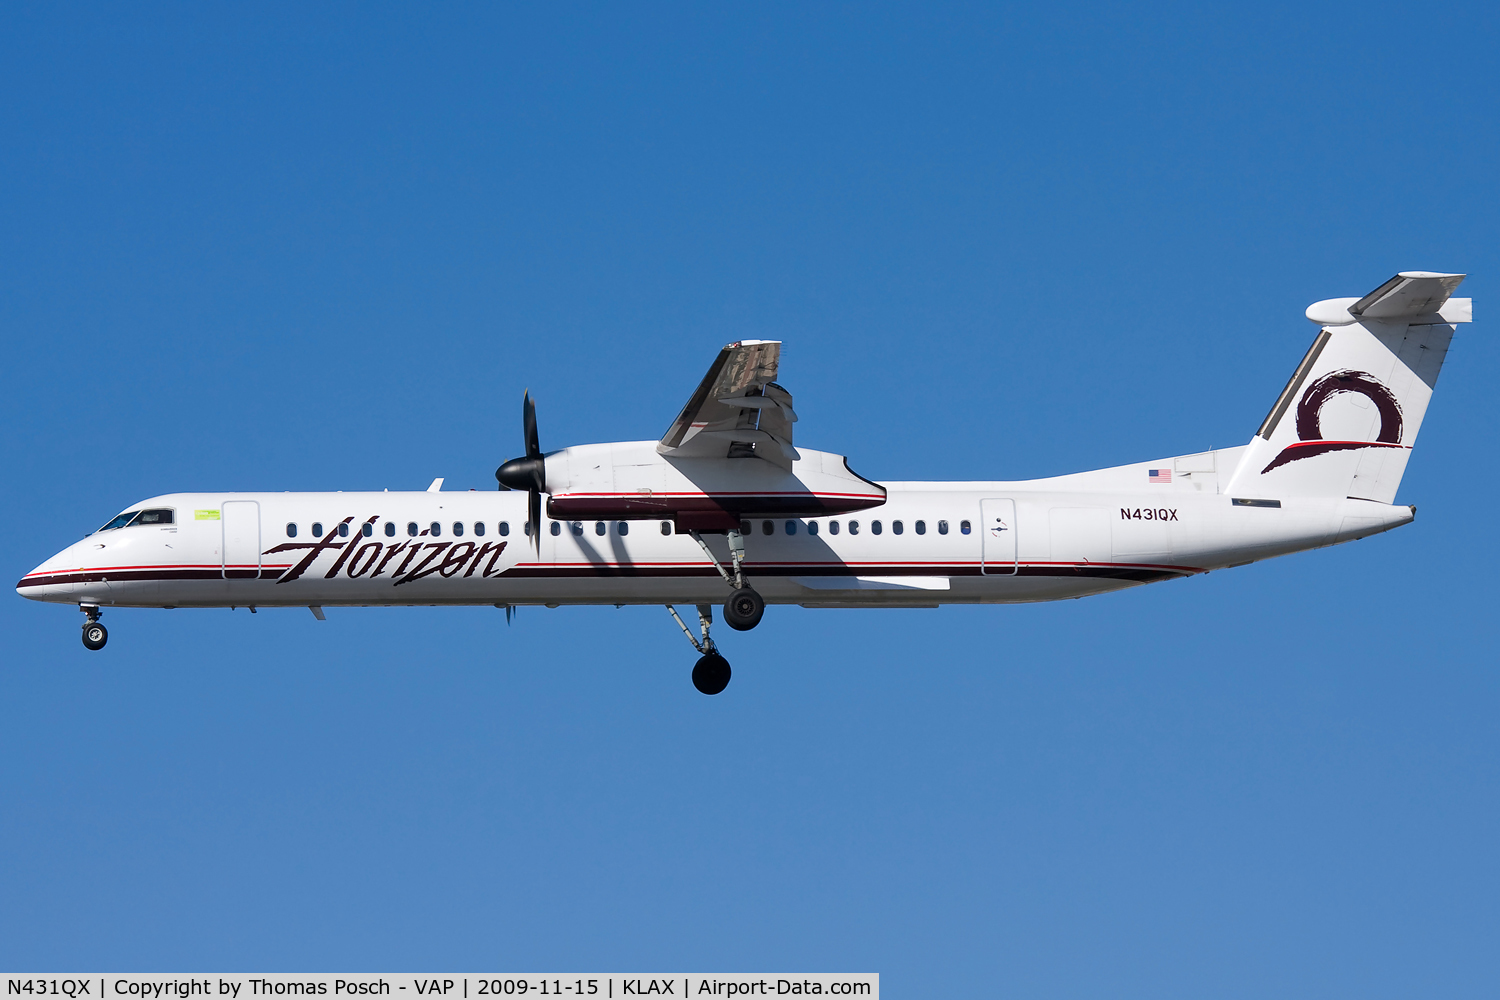 N431QX, 2007 Bombardier DHC-8-402 Dash 8 C/N 4164, Horizon Airlines